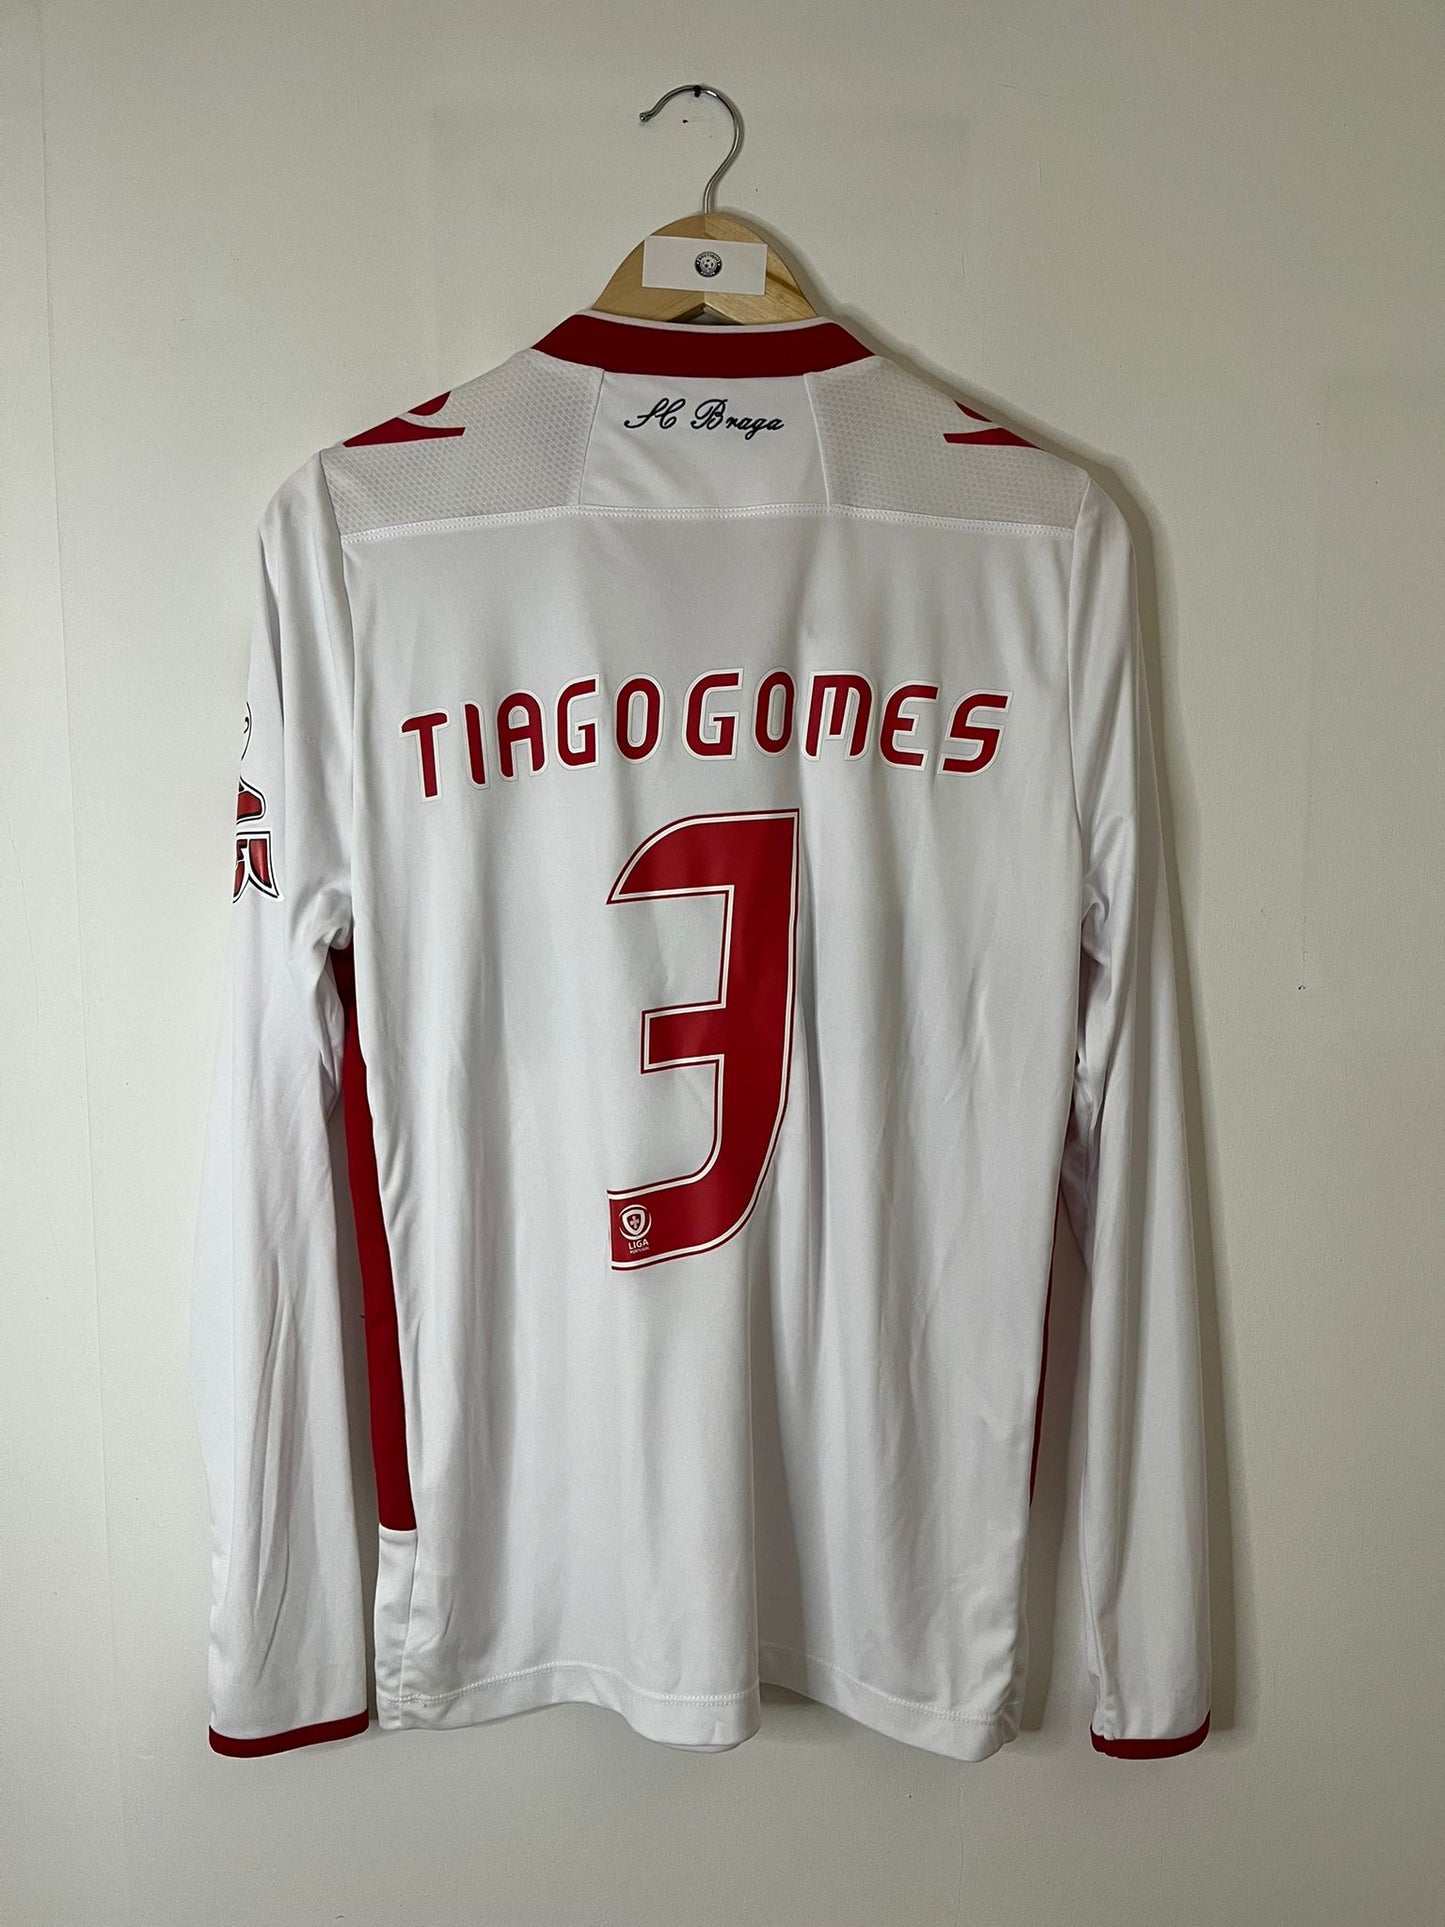 Braga 2014-15 kits